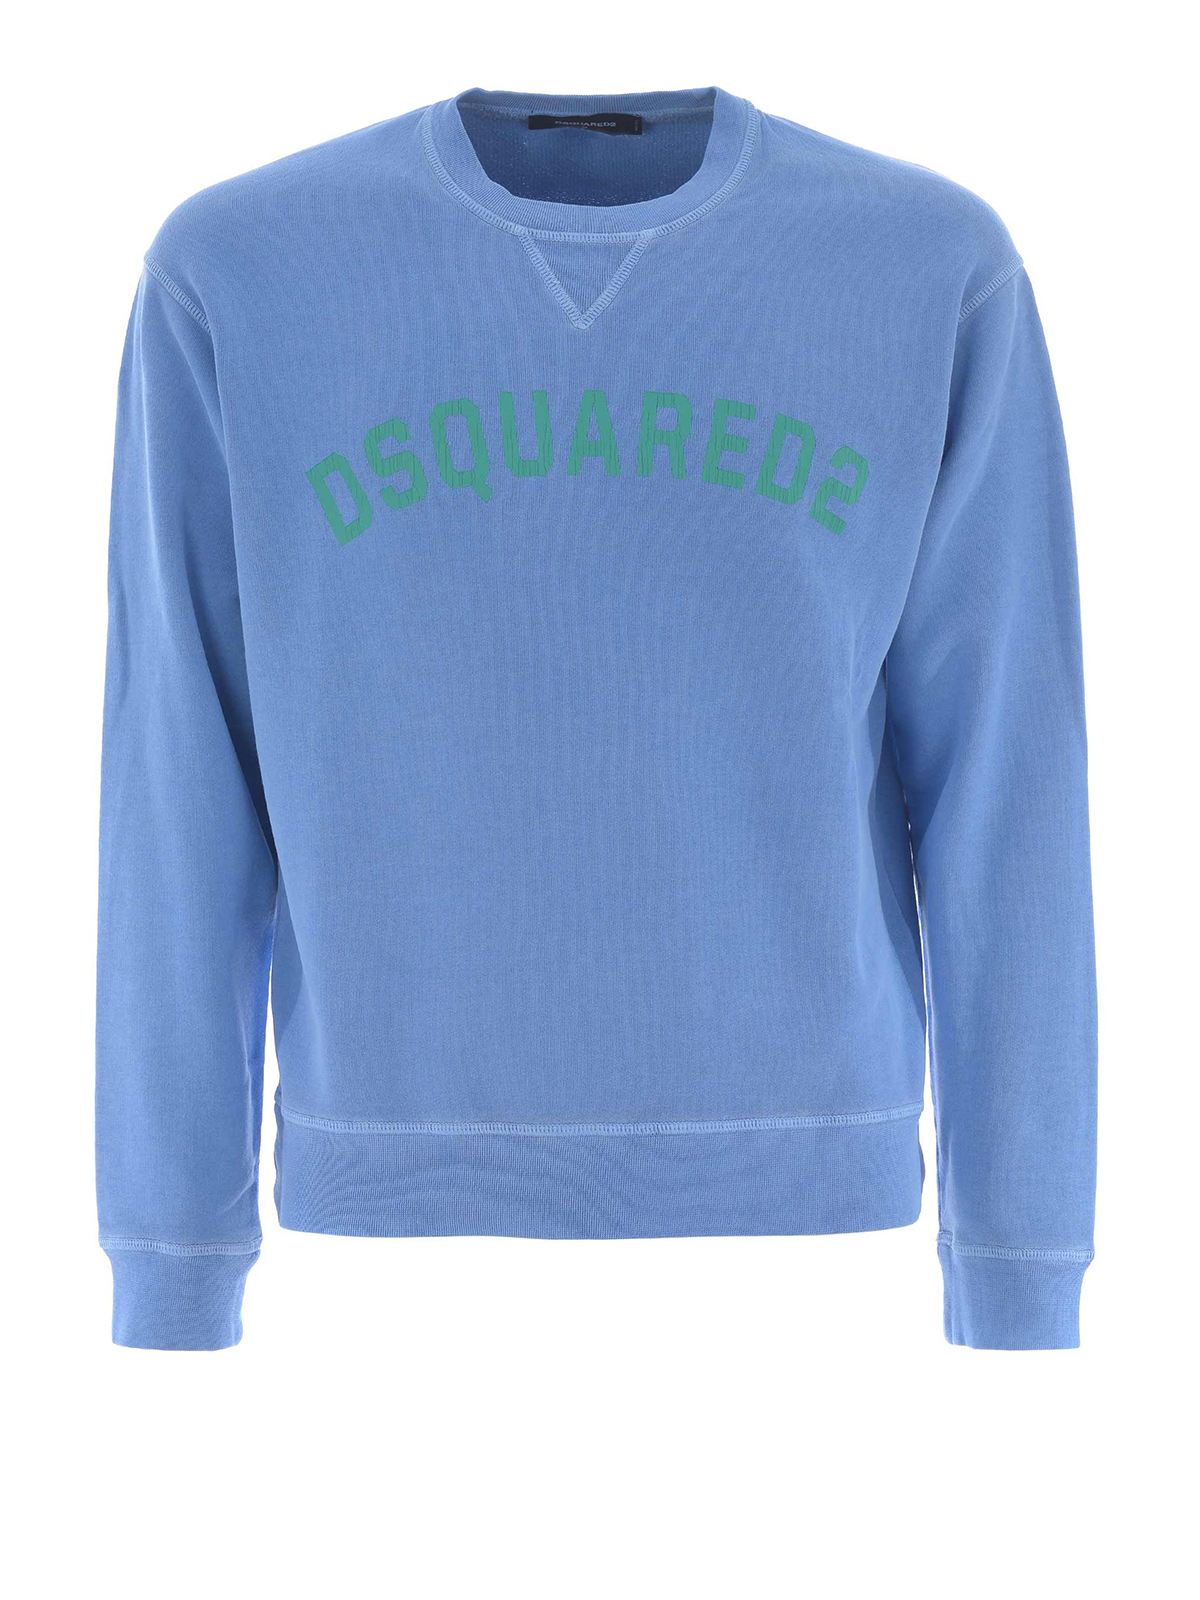 Download Dsquared2 - Logo print light blue sweatshirt - Sweatshirts ...